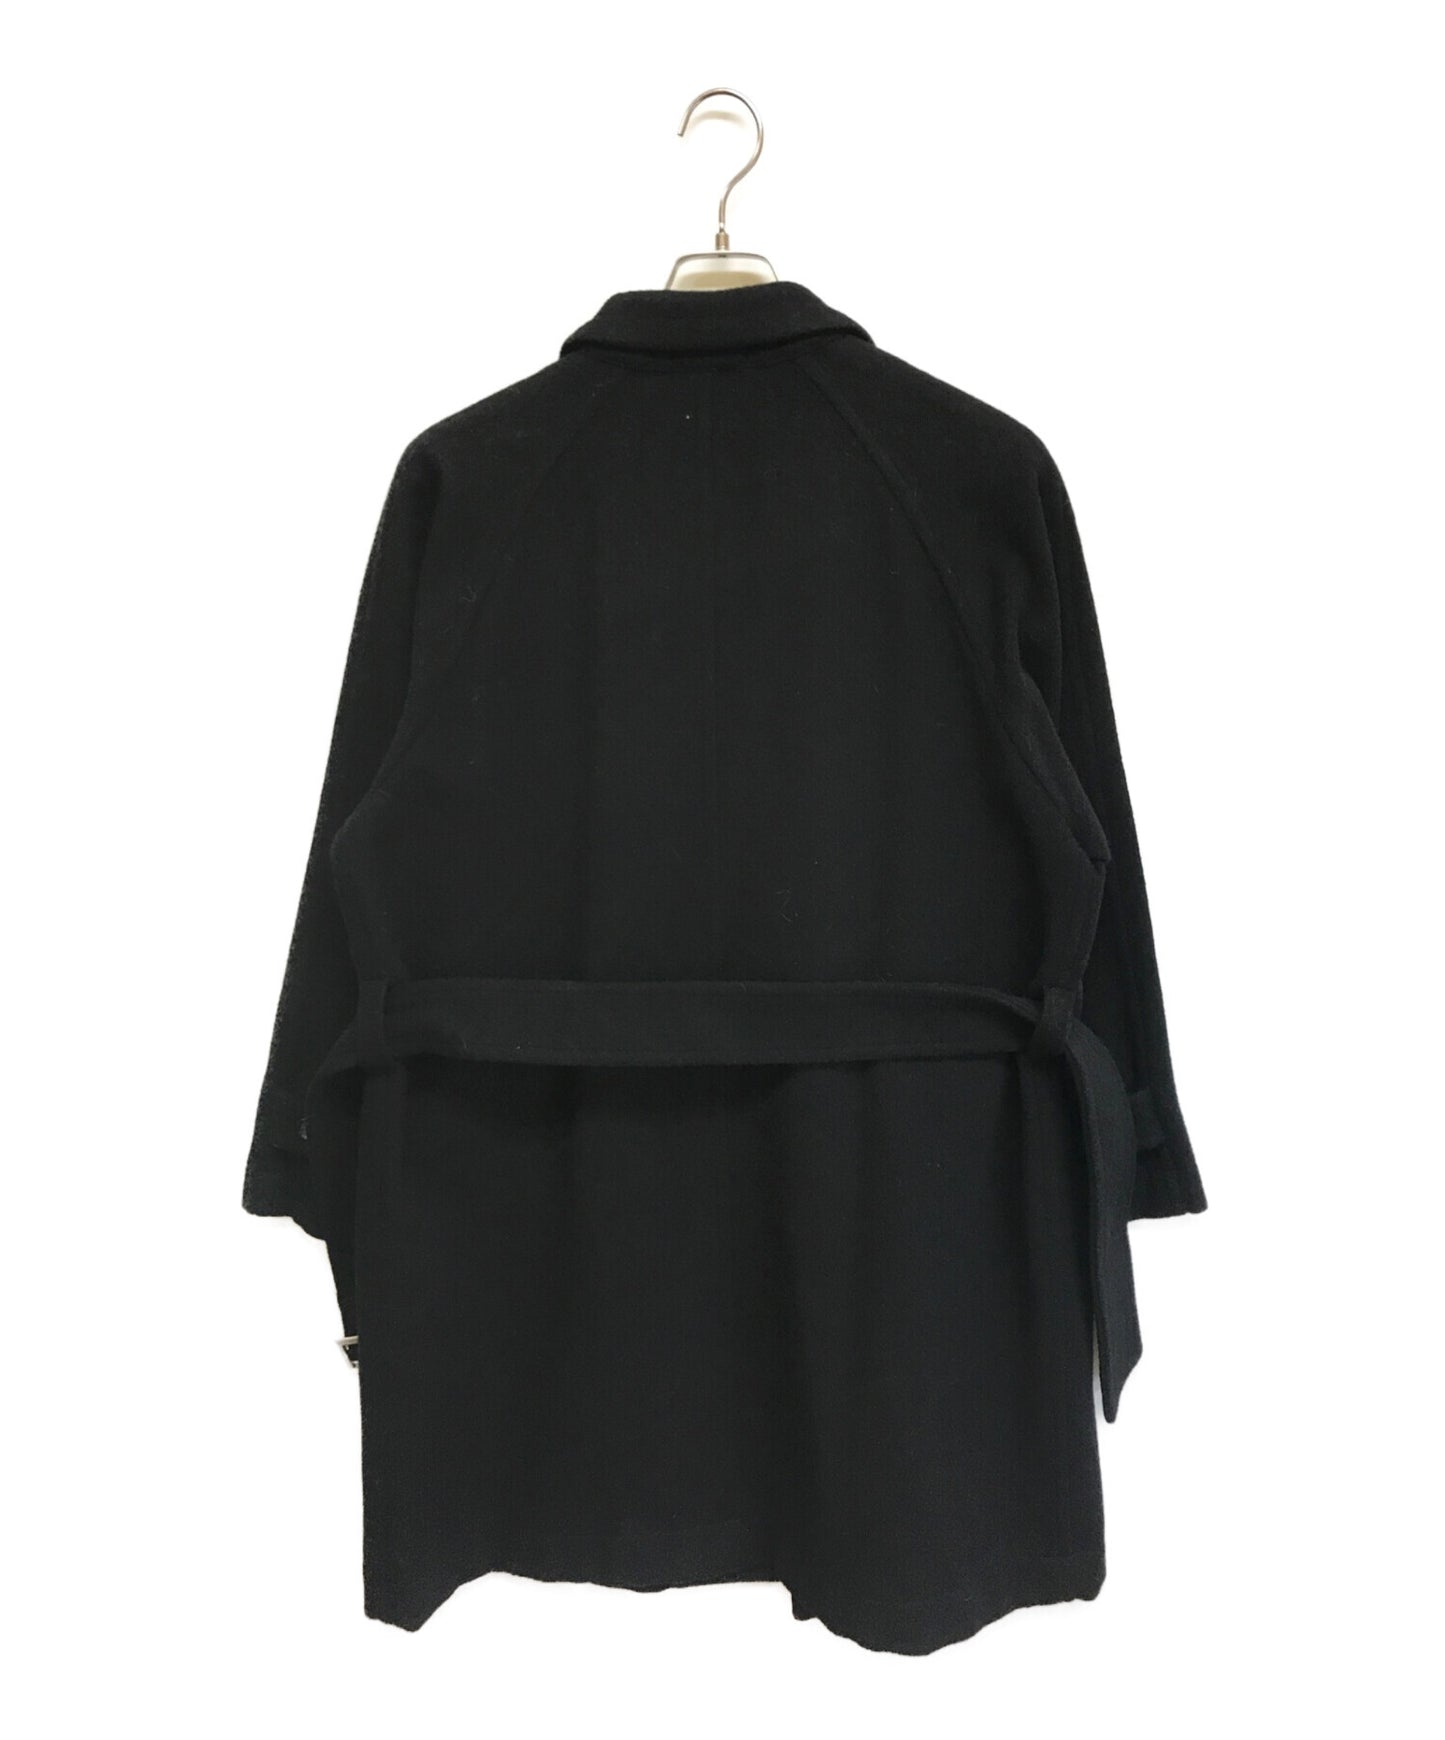 [Pre-owned] tricot COMME des GARCONS double coat